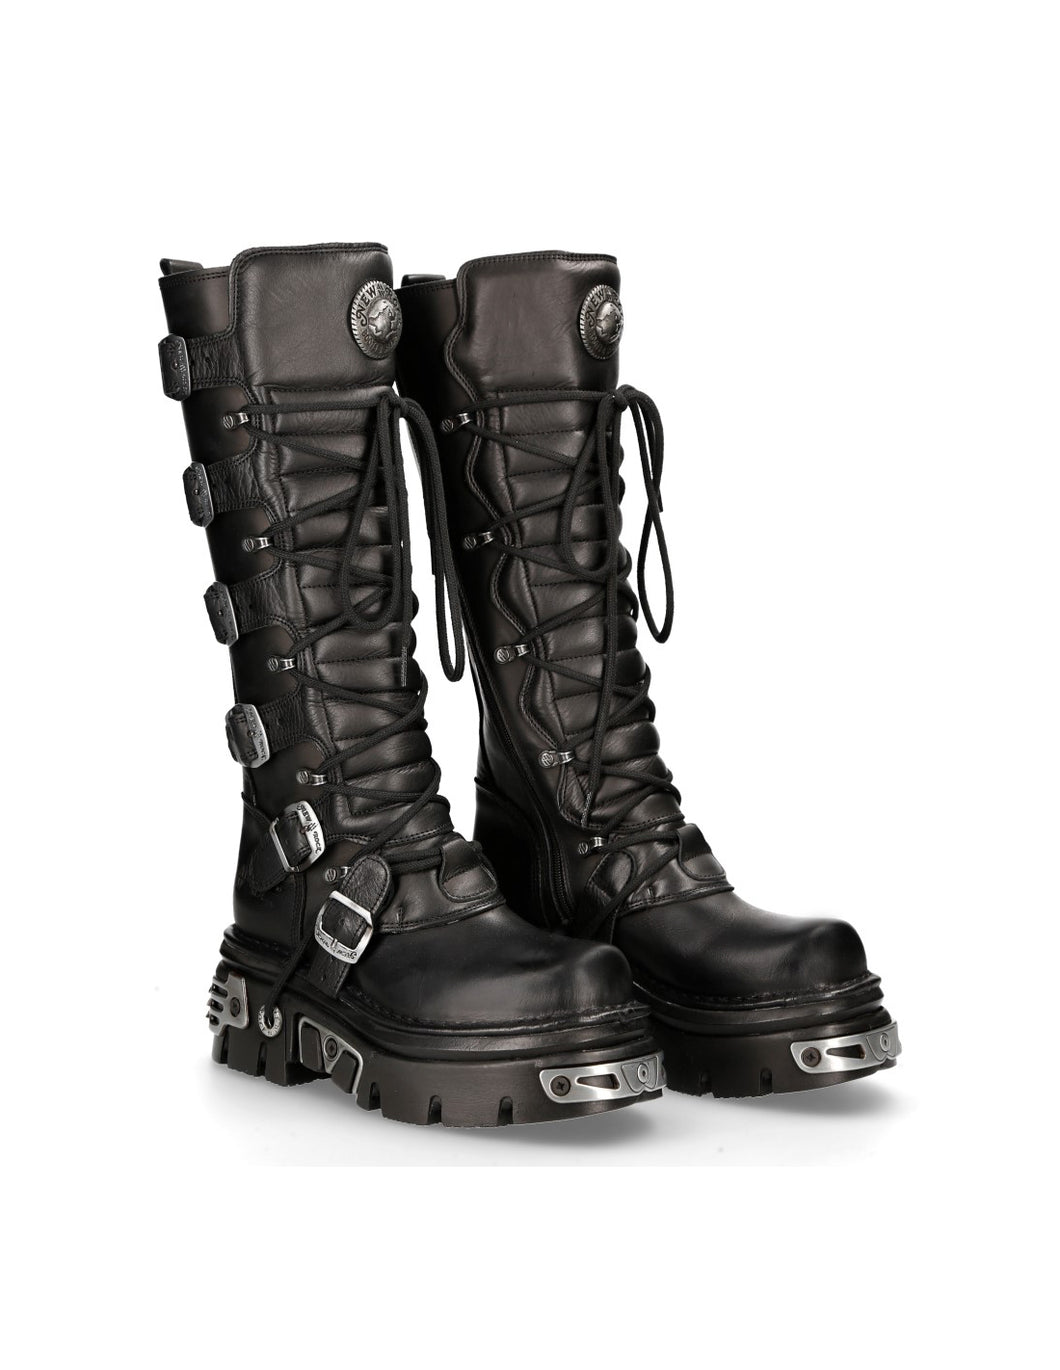 New Rock Schuhe High Boots M-272-S1 Stiefel Gothic Echtleder